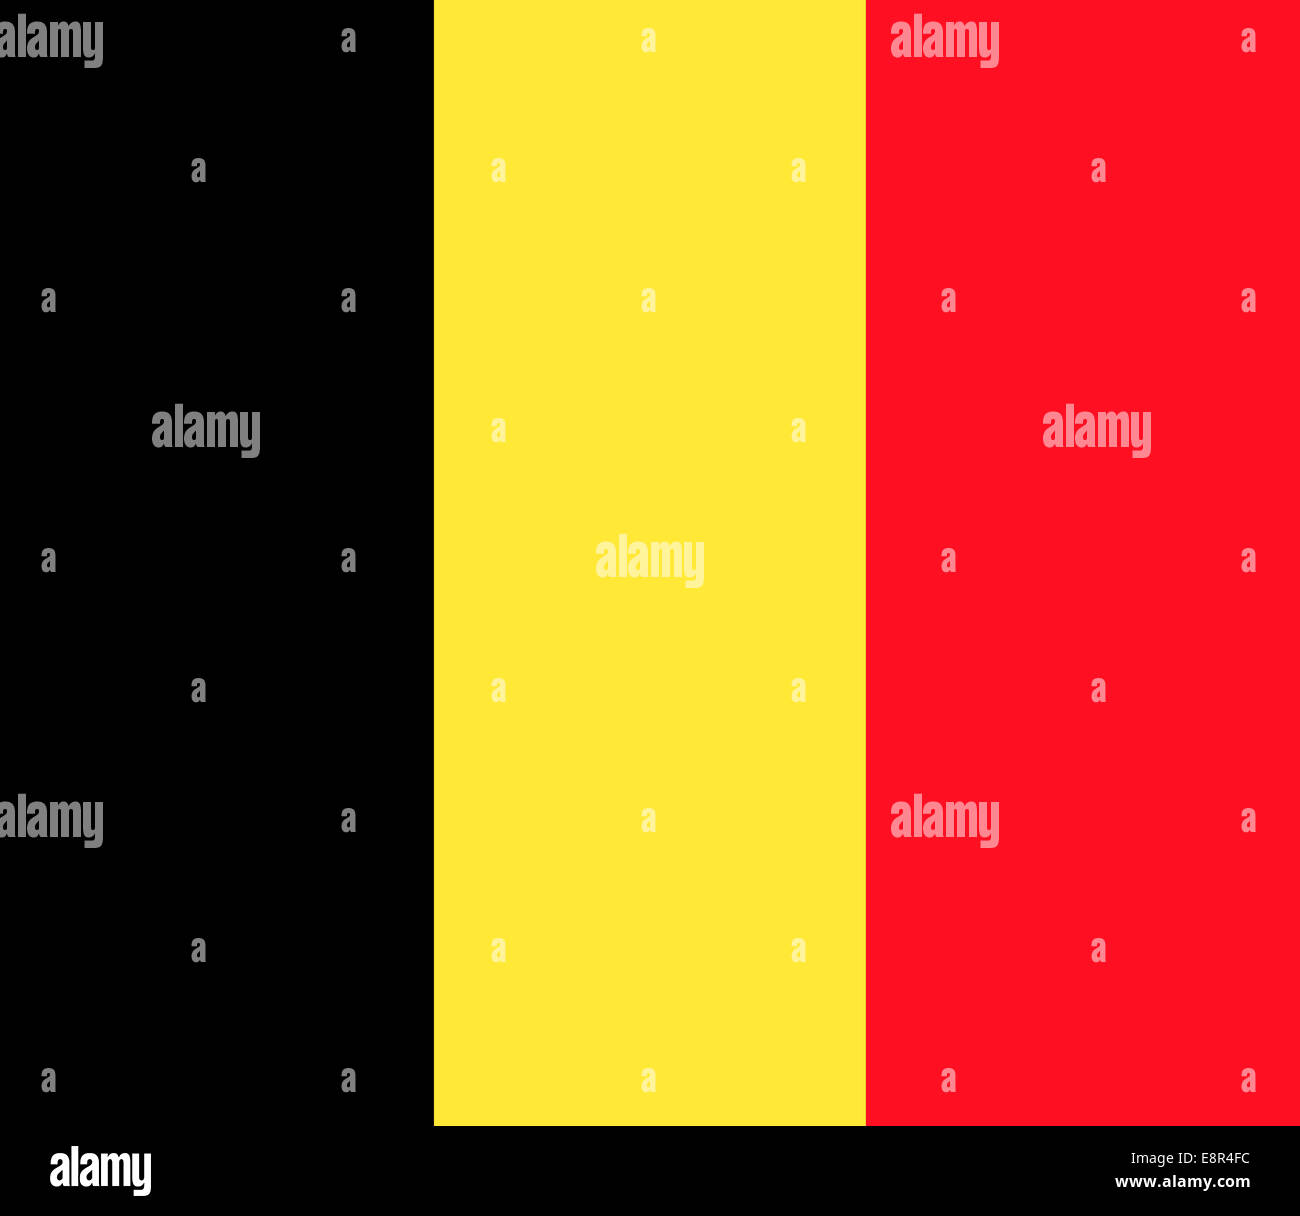 Flag of Belgium - Belgium flag standard ratio - true RGB color mode Stock Photo